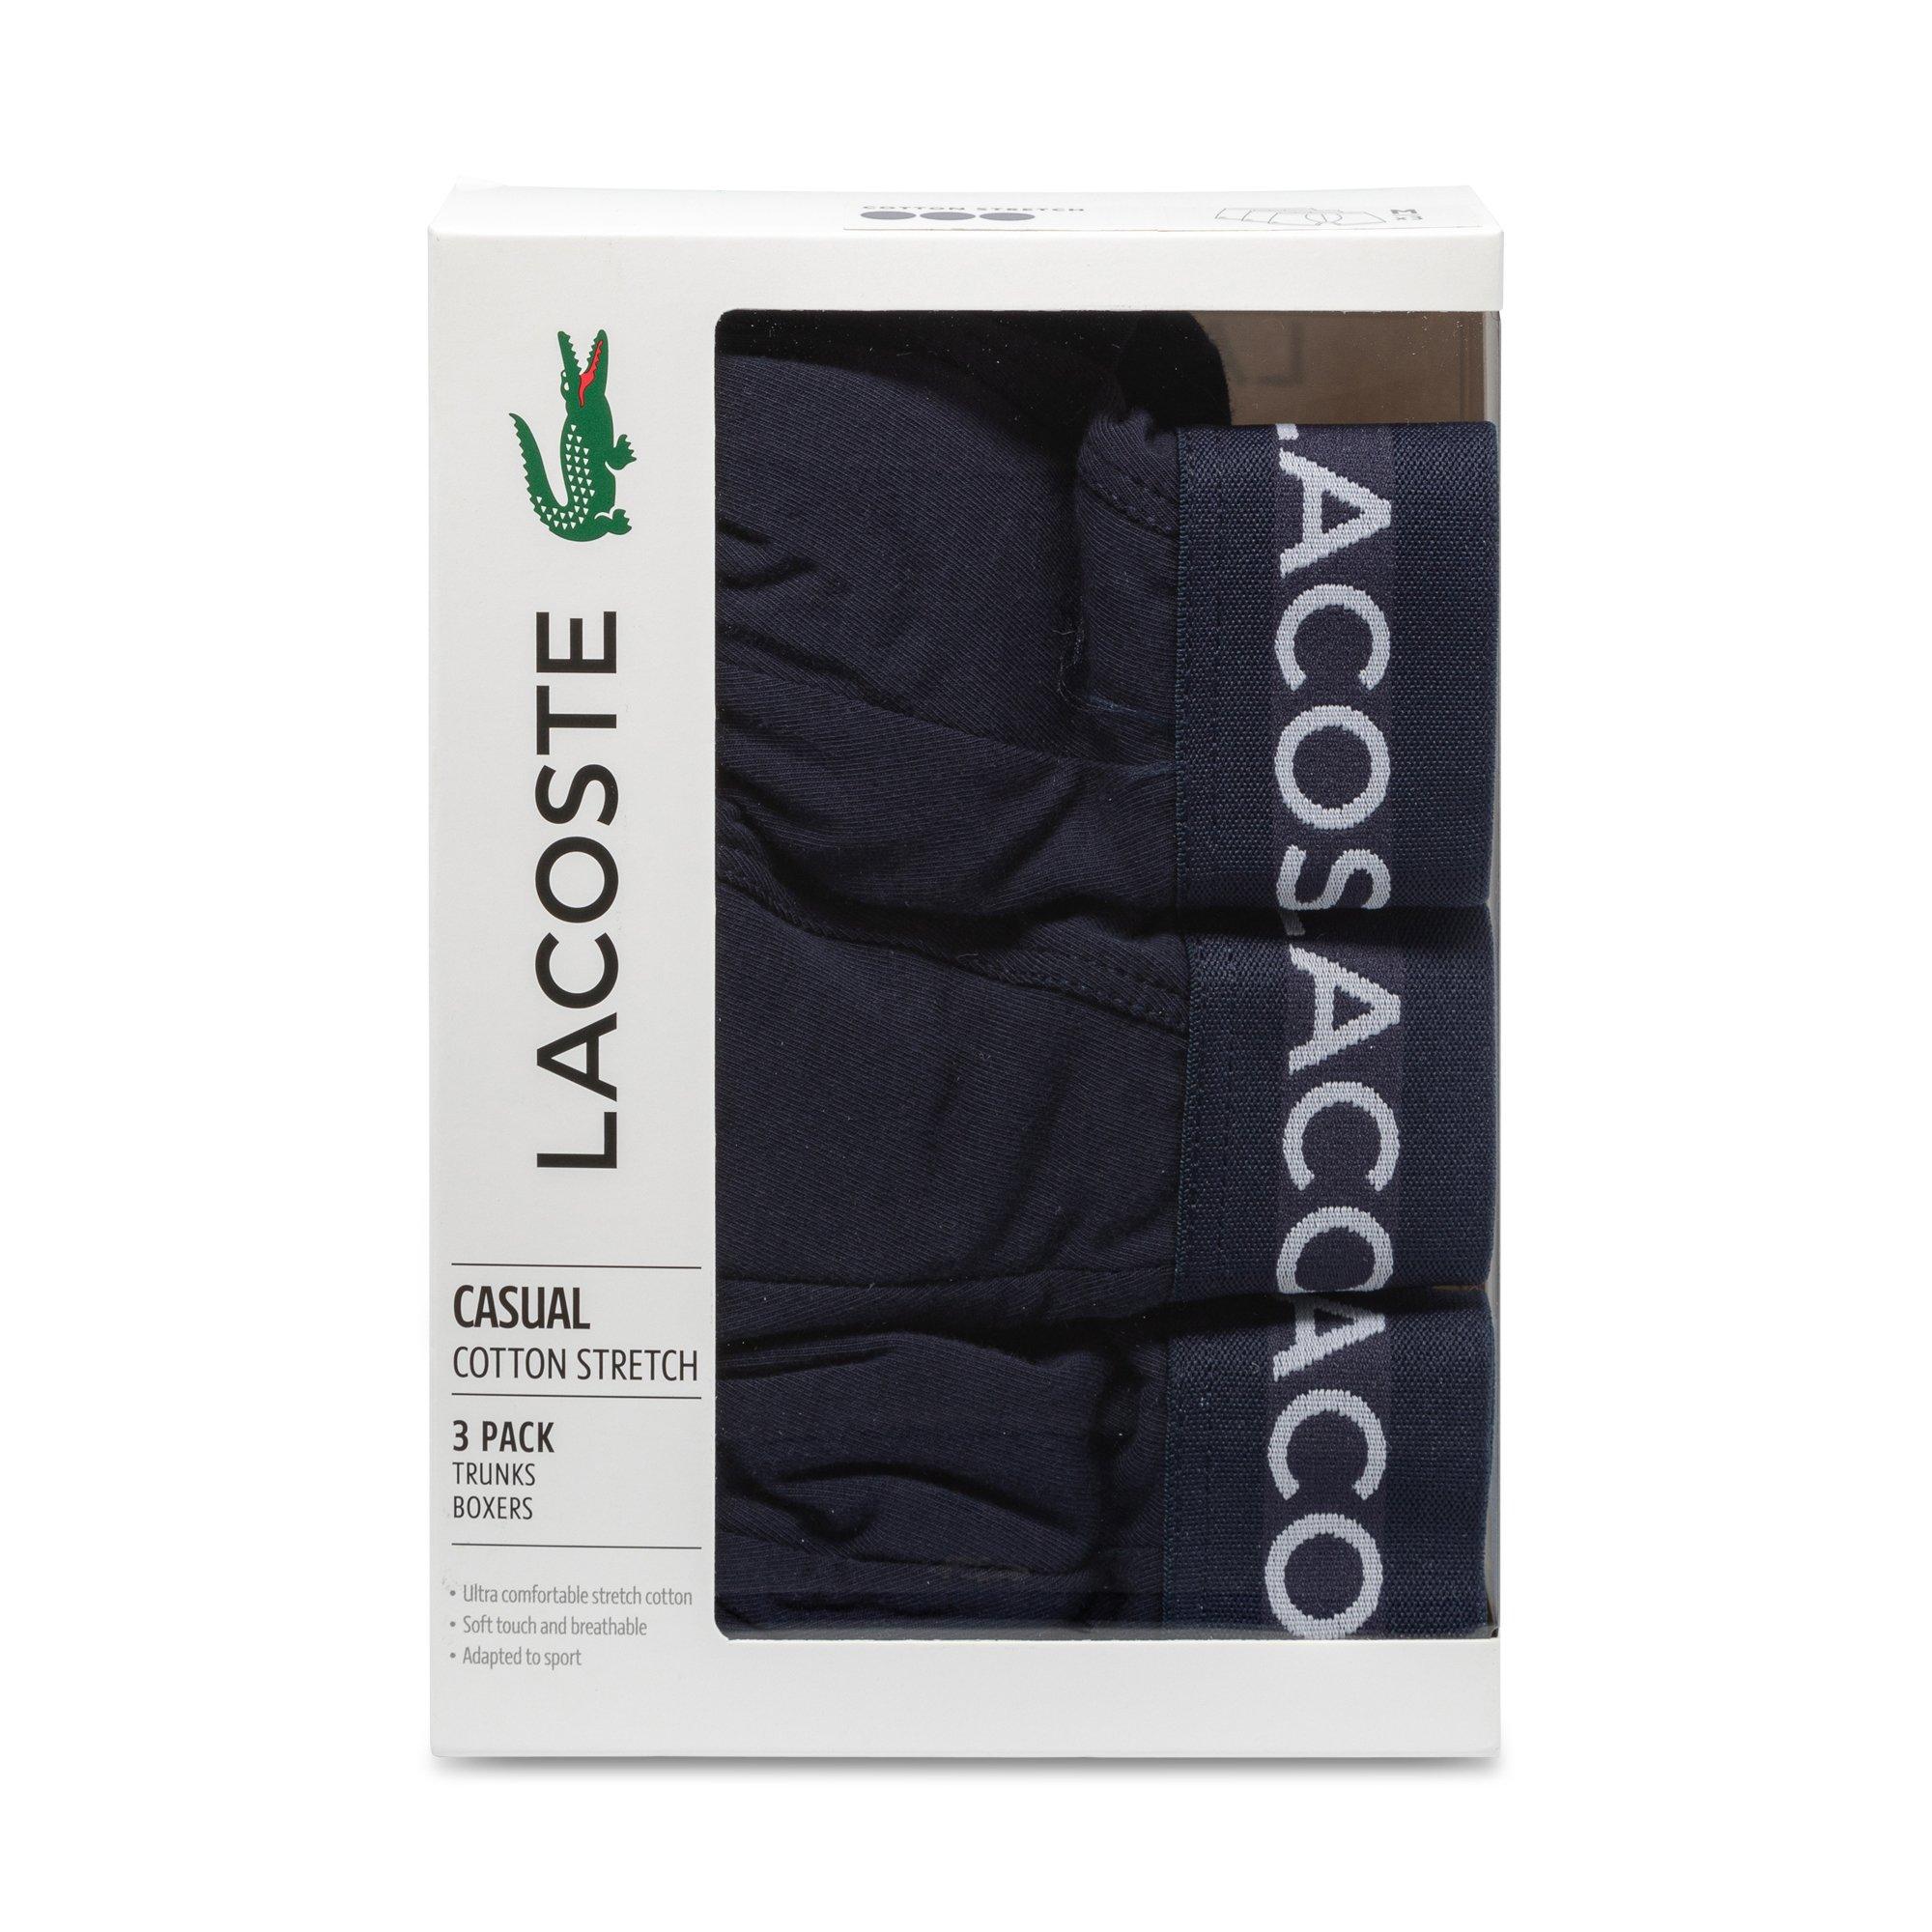 LACOSTE  Culotte, 3-pack 